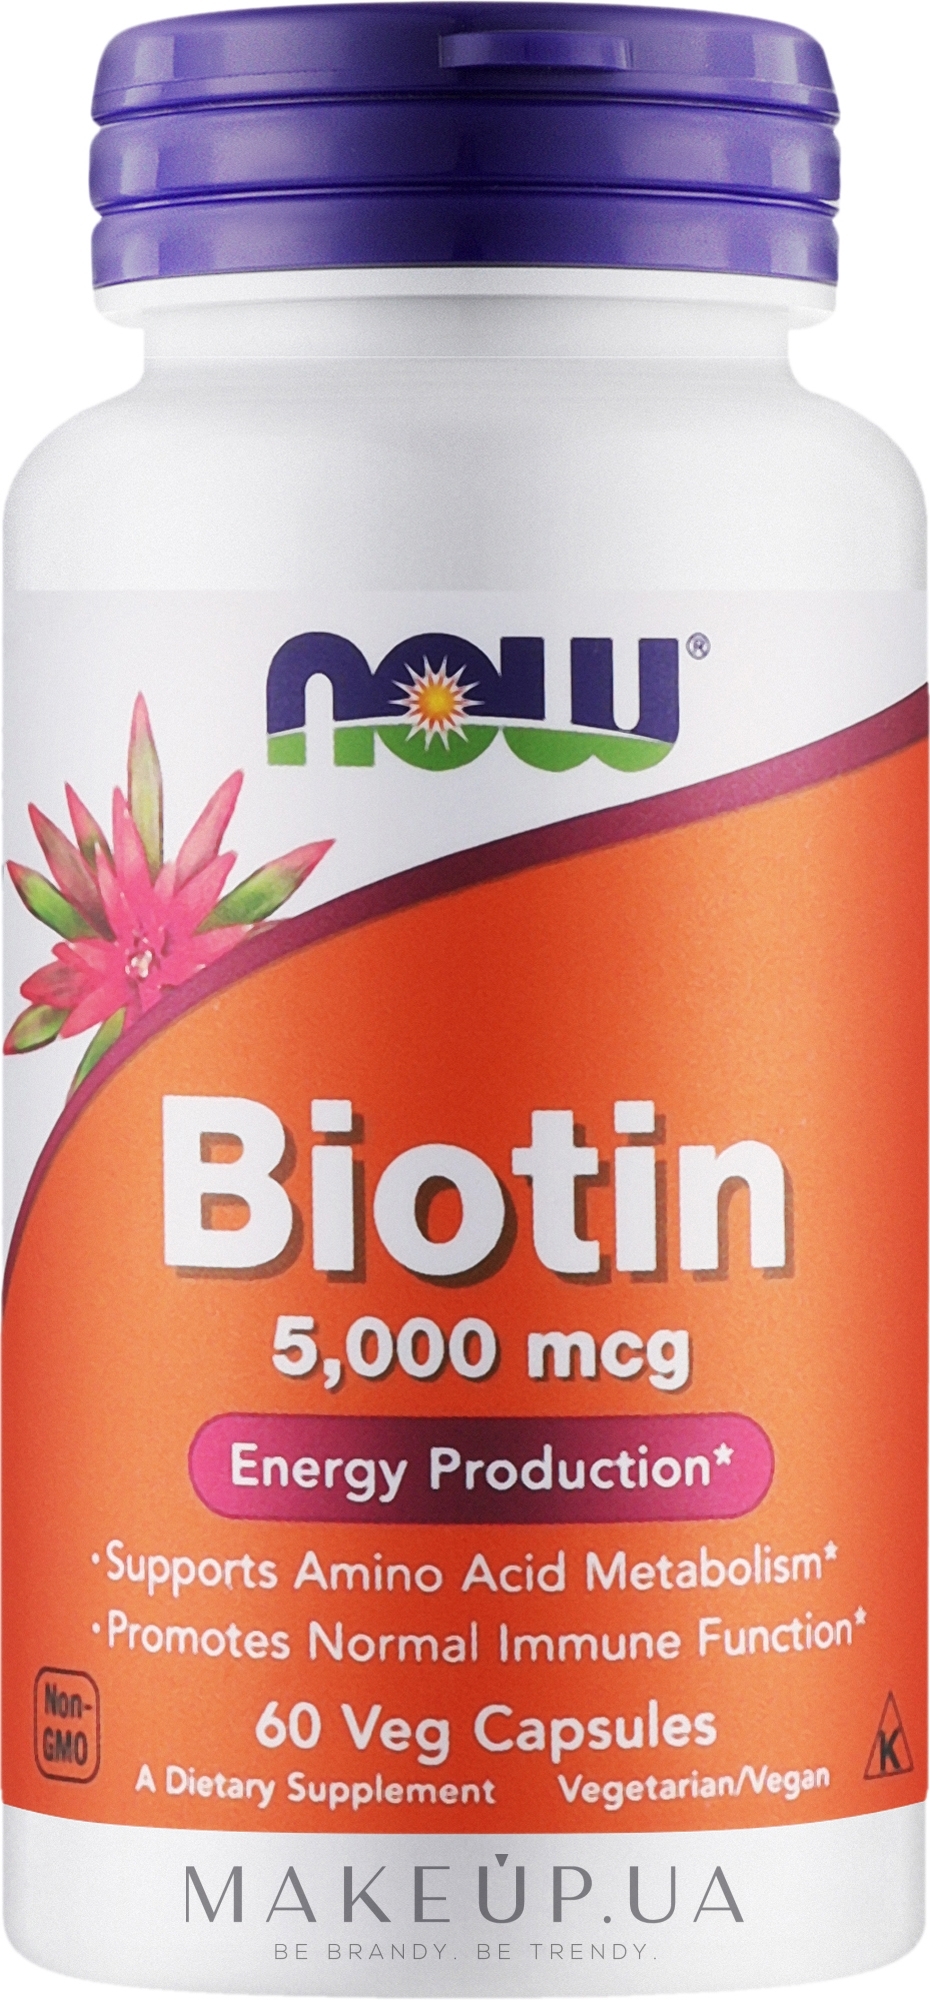 Дієтична добавка "Біотин 5000 мкг" - Now Biotin 5000 Mcg Energy Production — фото 60шт